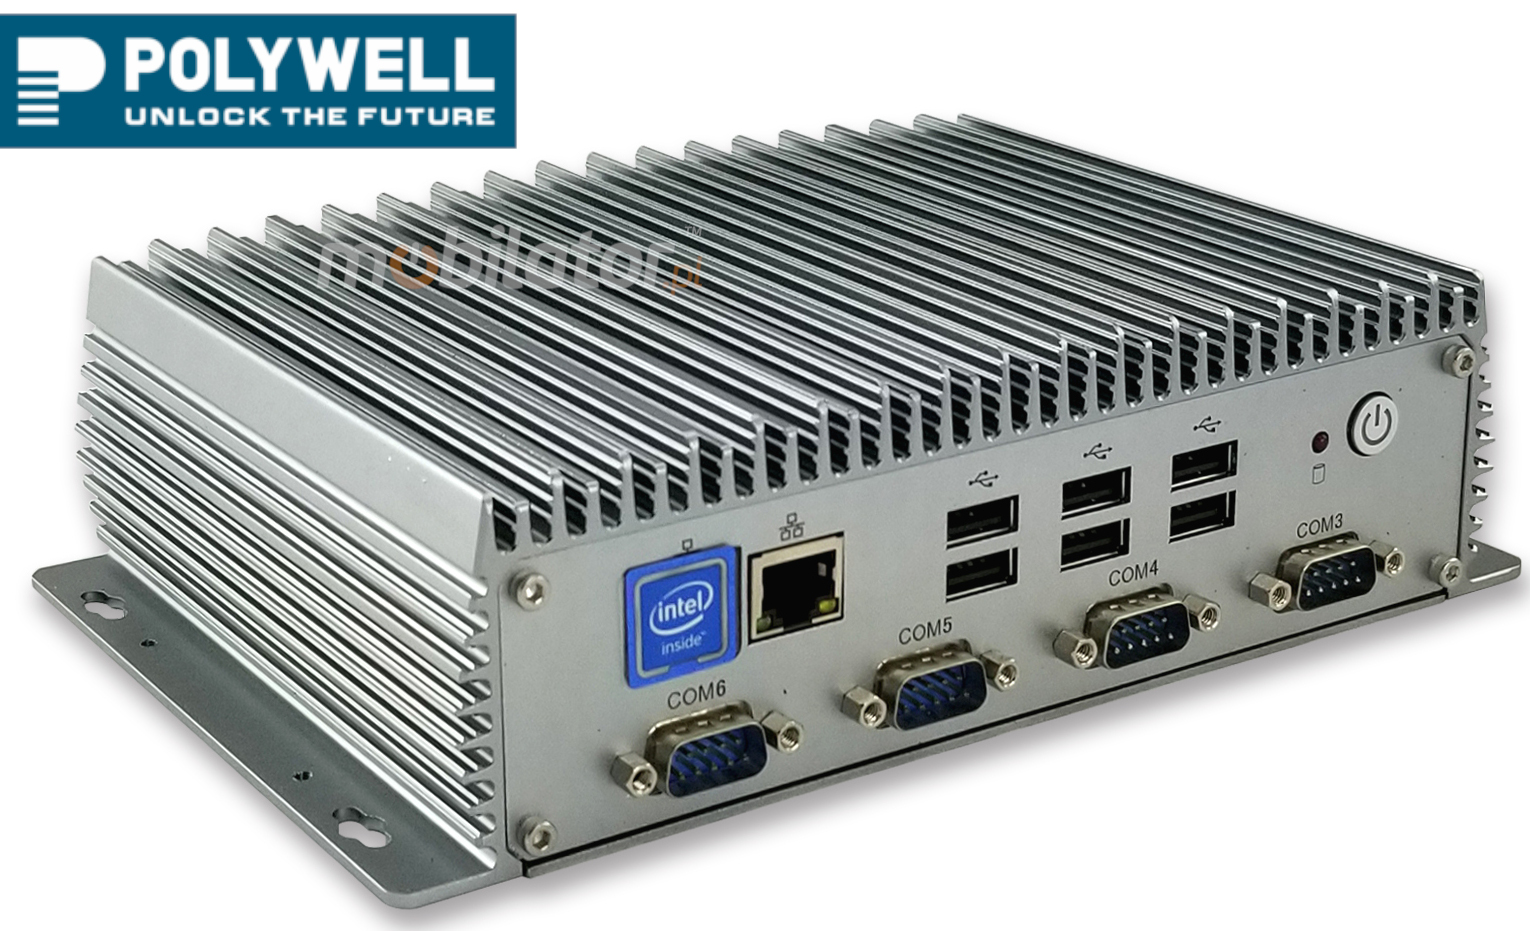 Polywell-Nano-U8FL2C6 Intel i5 small reliable fast and efficient mini pc